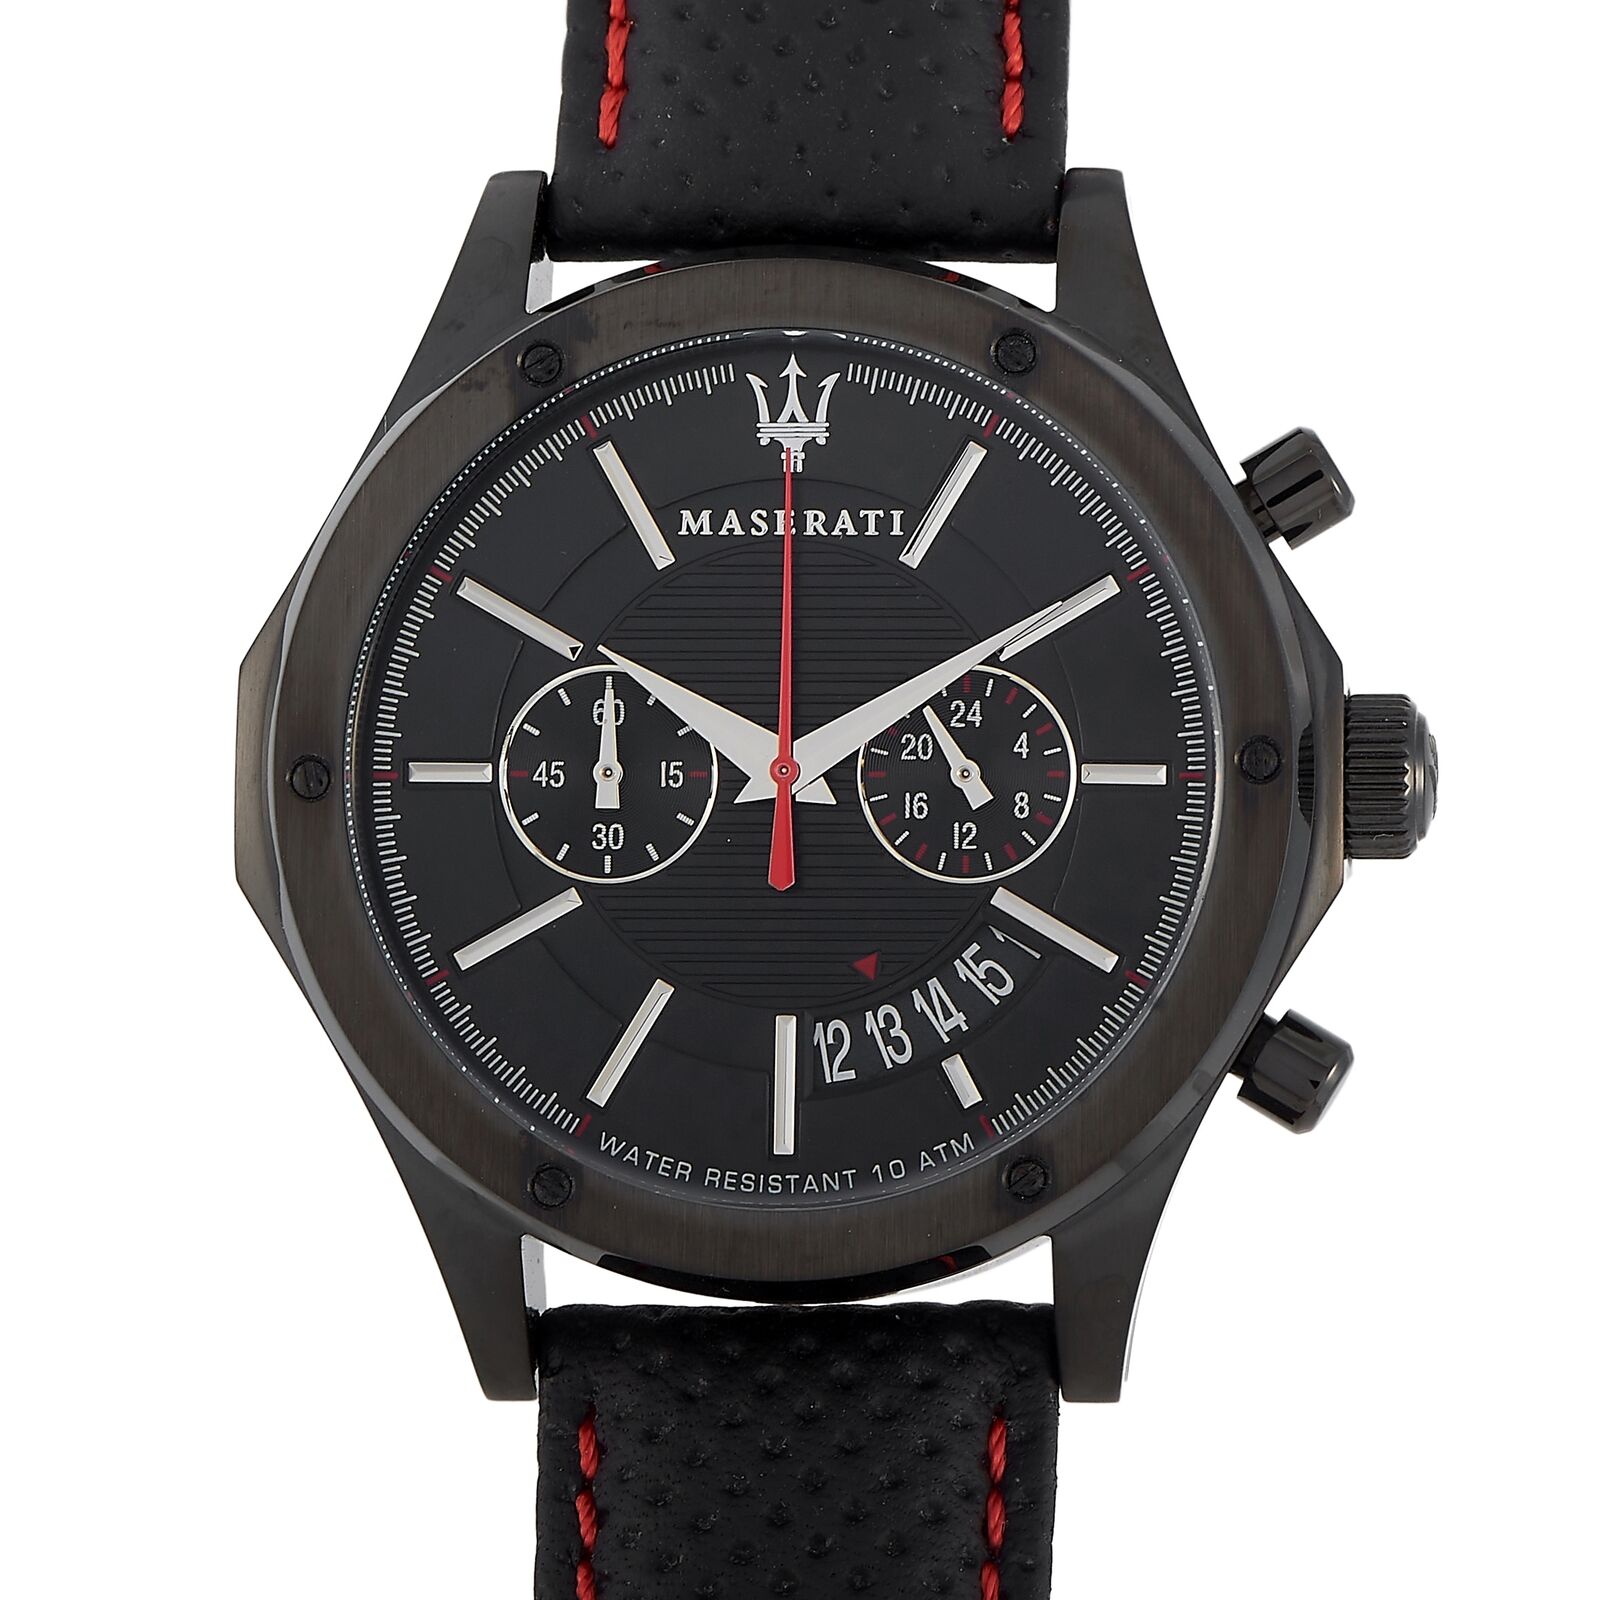 Maserati Circuito Black Dial Leather Strap Watch For Men - R8871627004